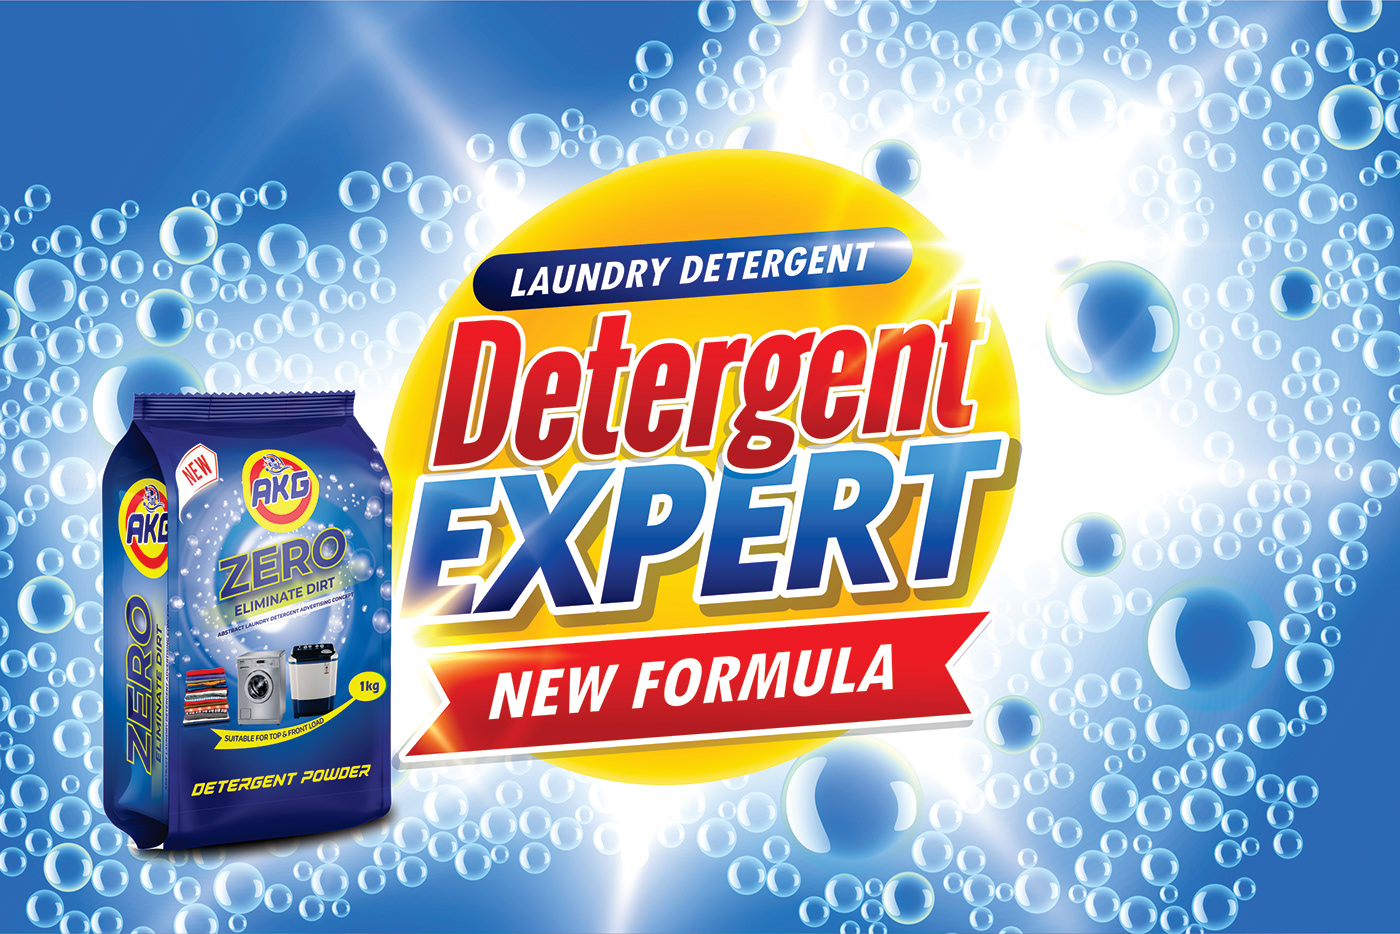 detergent powder detergent washing powder Clots Washing laundry brand identity Mockup